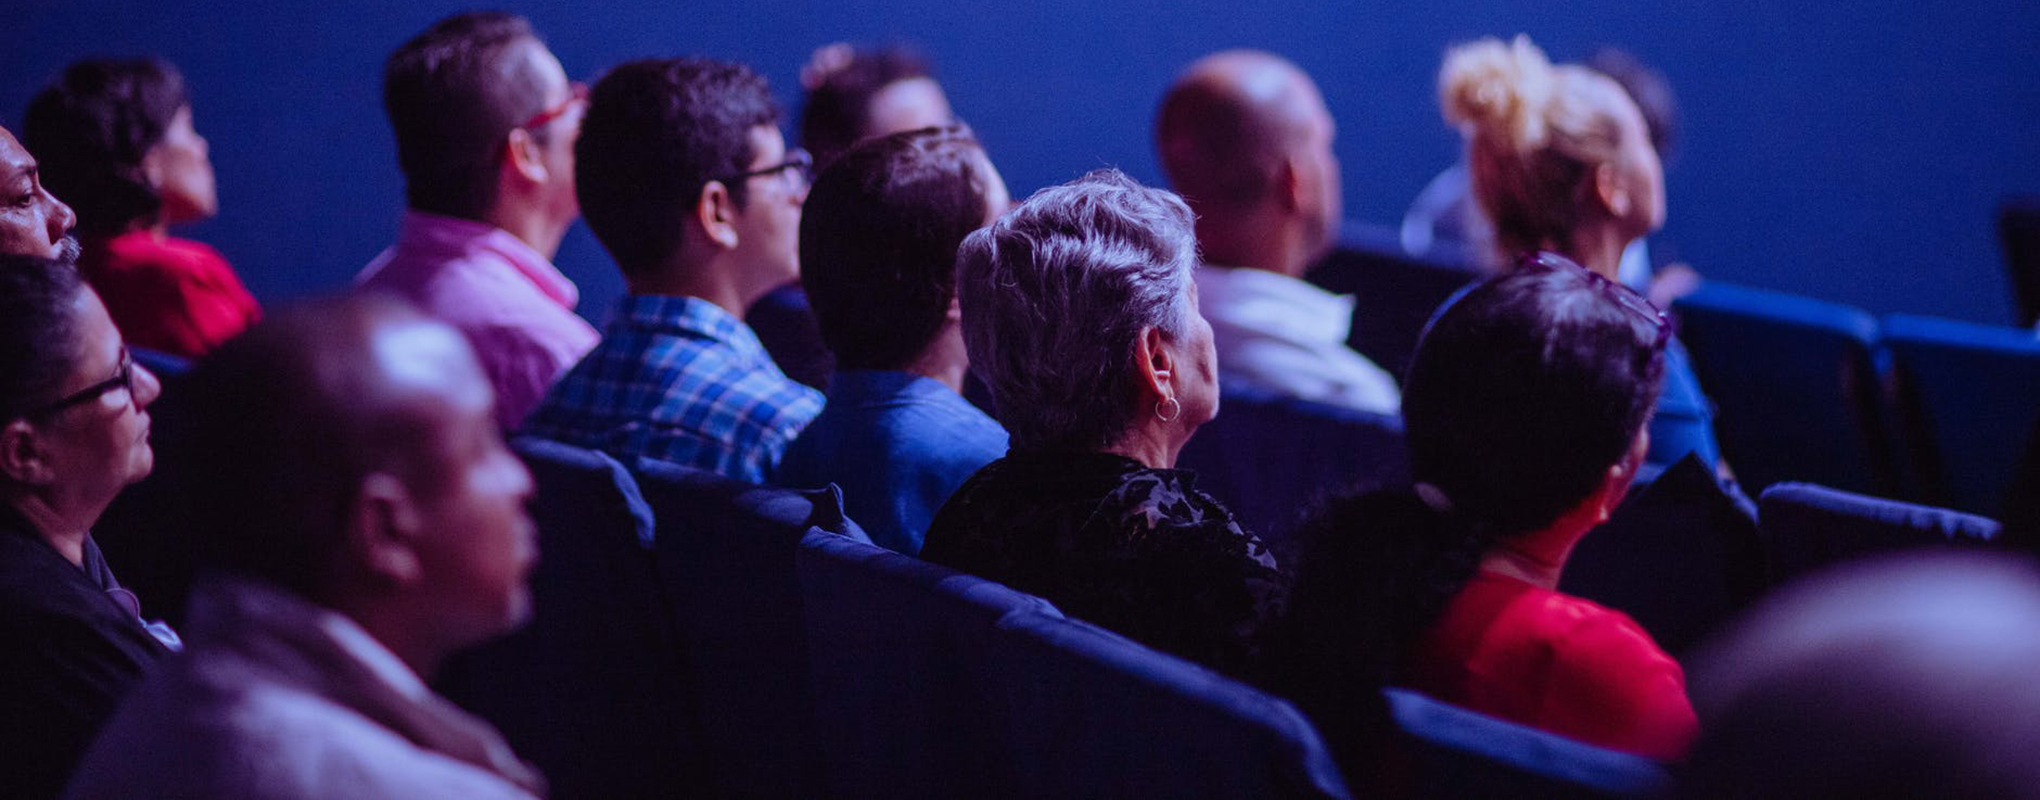 People sitting in audience